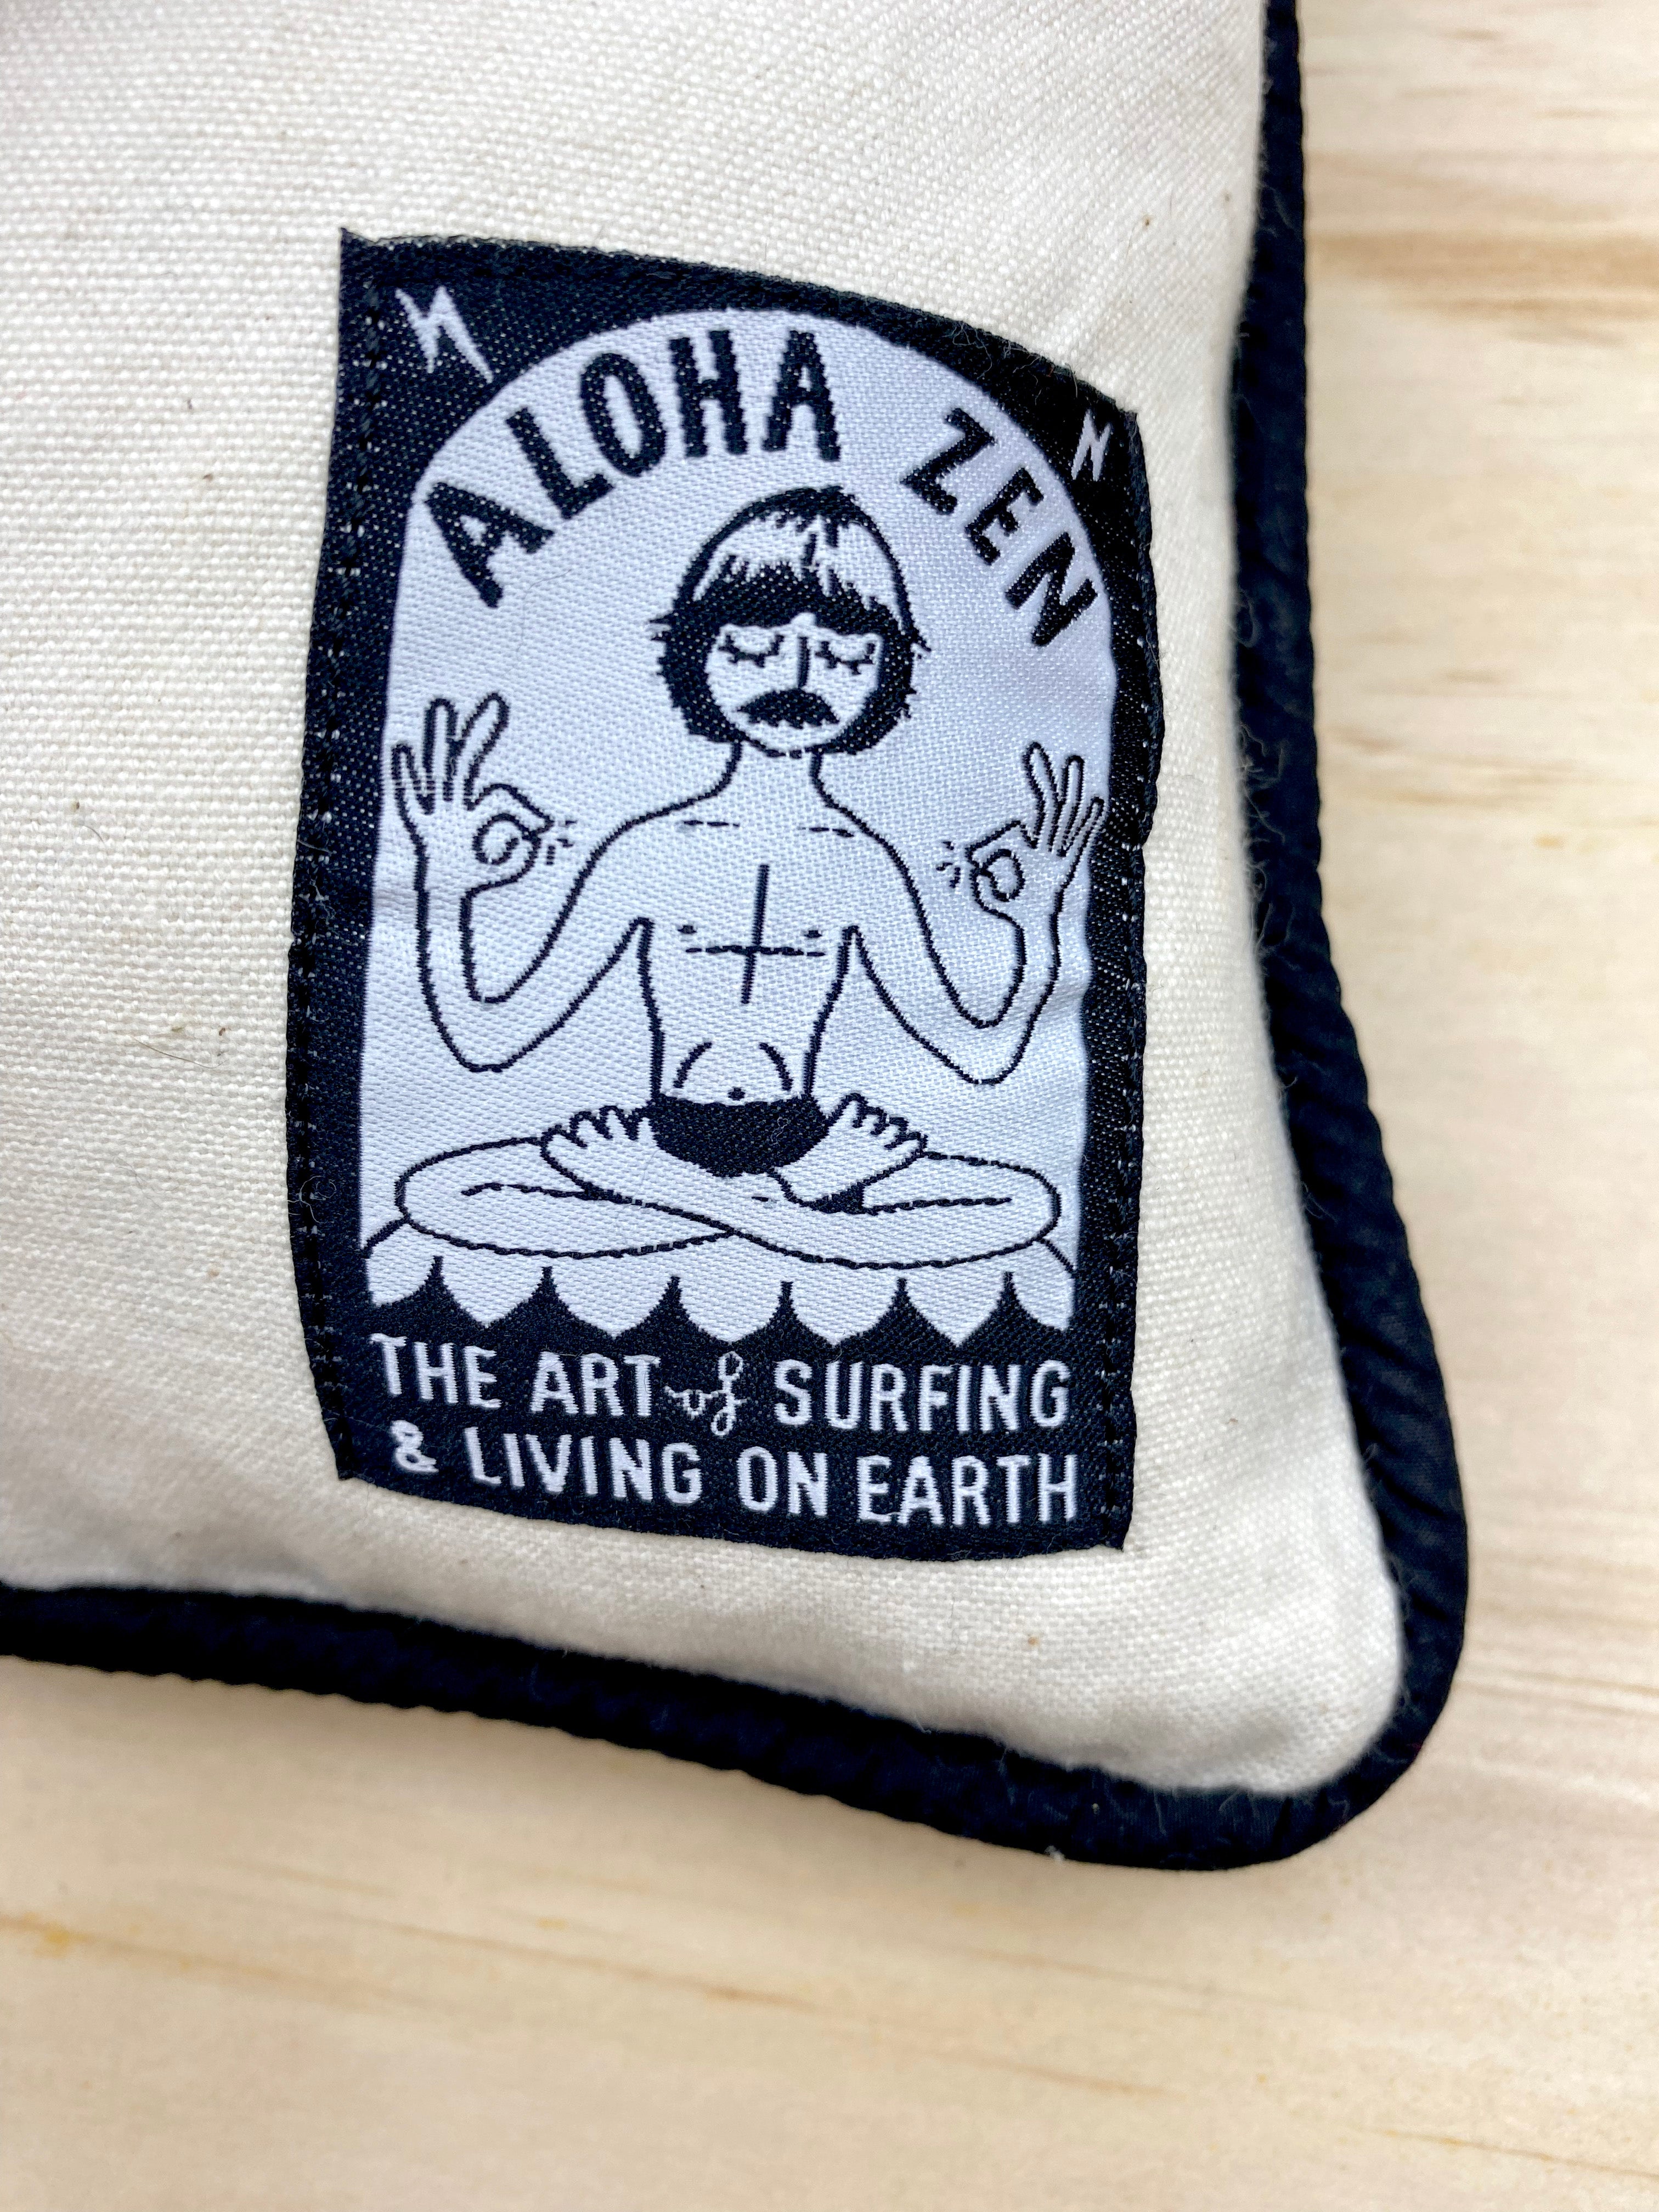 KEEP ON SURFIN' / Hand Embroidered Pillow / az 066